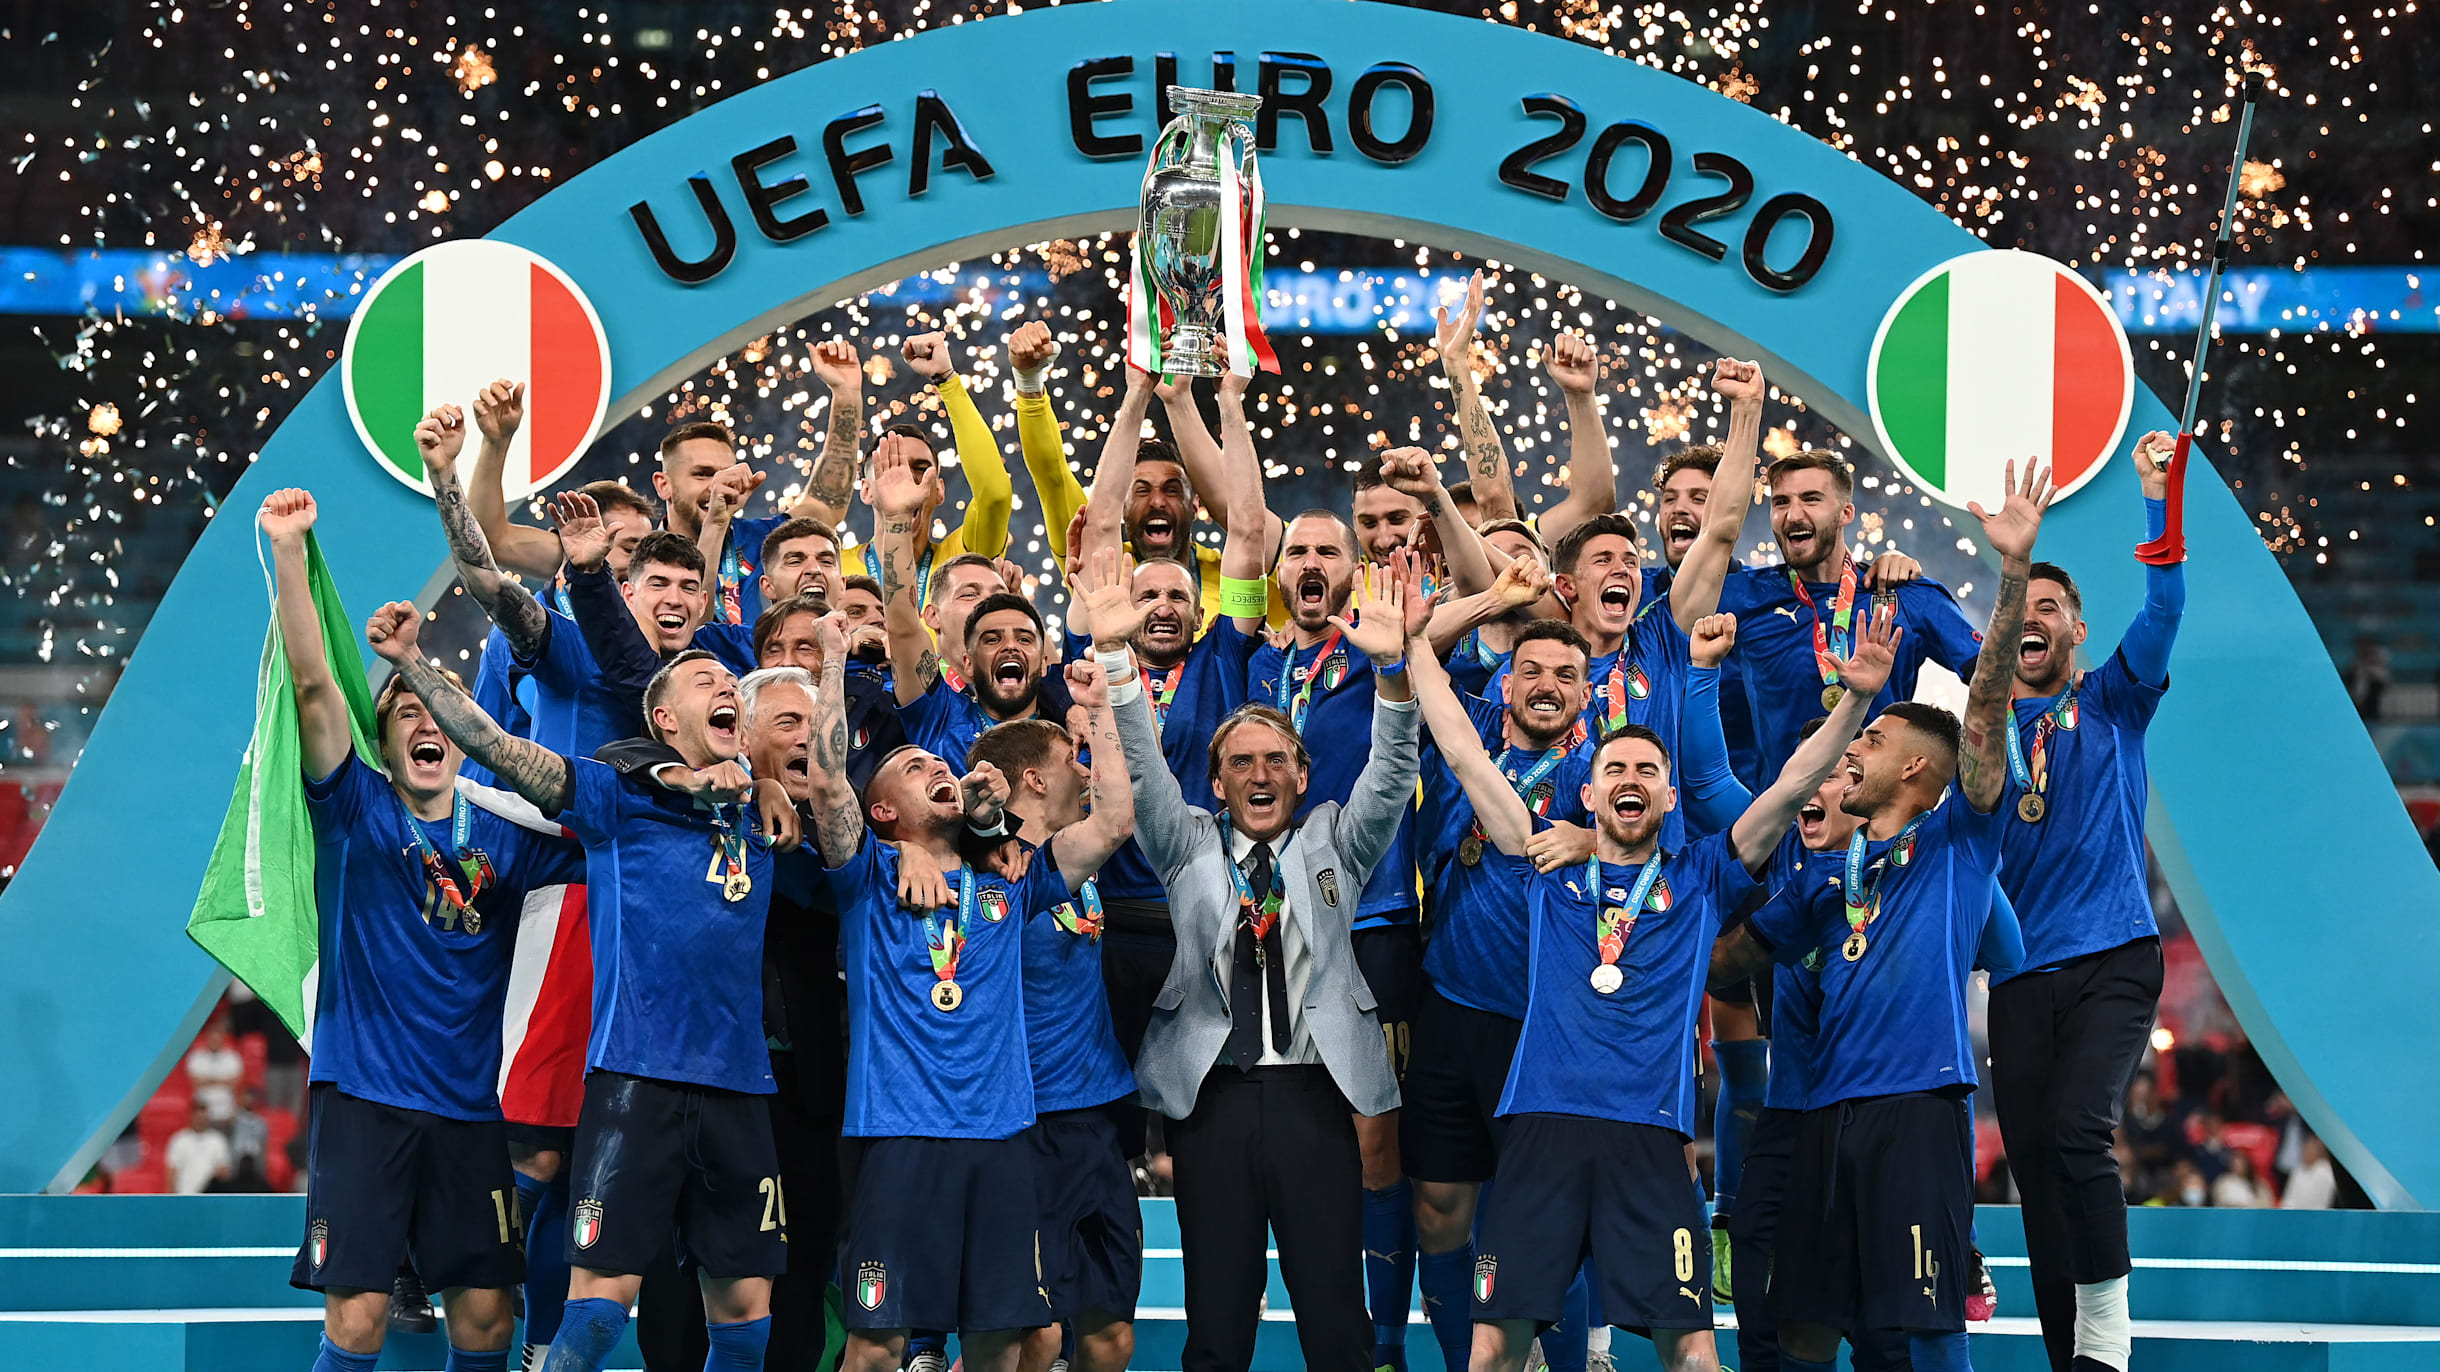 UEFA Euro winners: Know the champions - full list